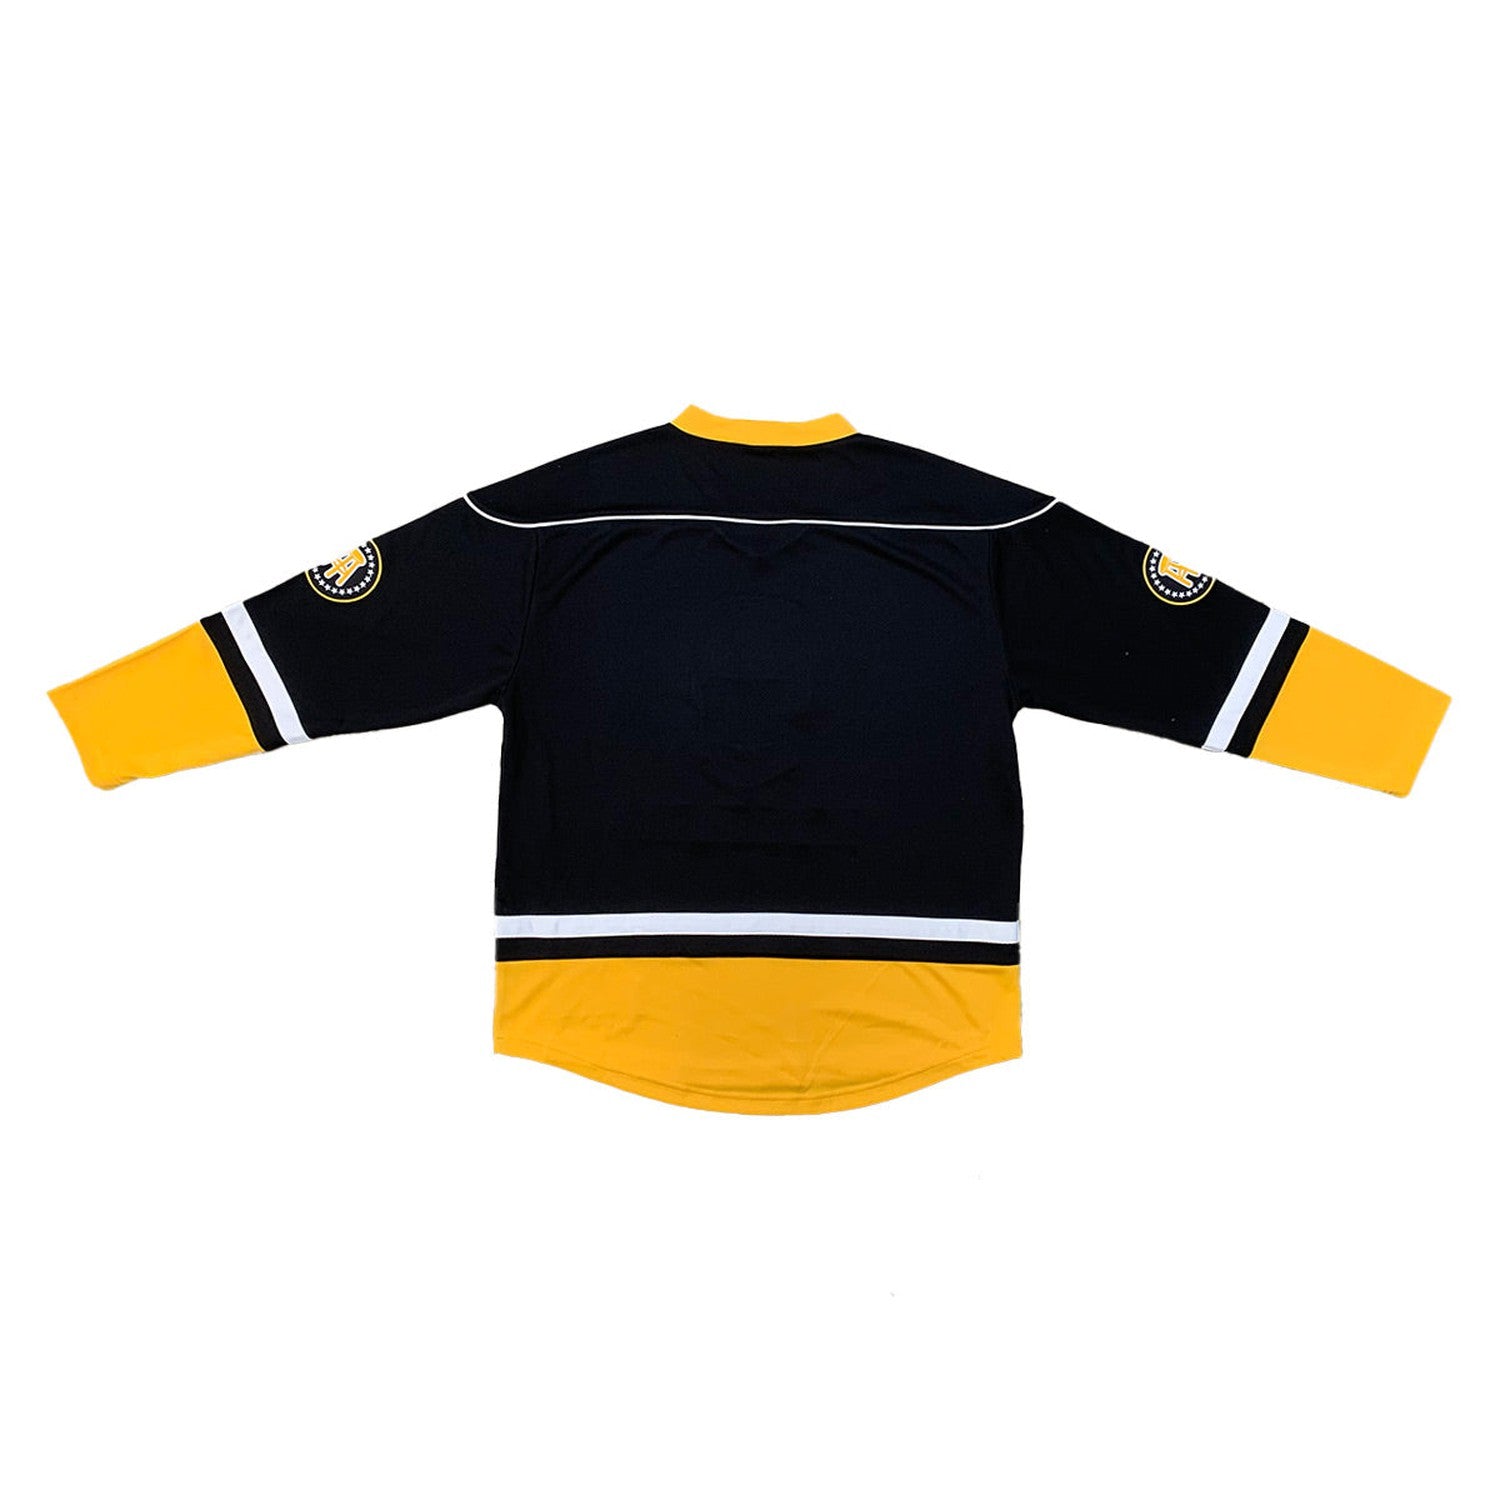 Spittin Chiclets Authentic Hockey Jersey | Spittin' Chiclets Black